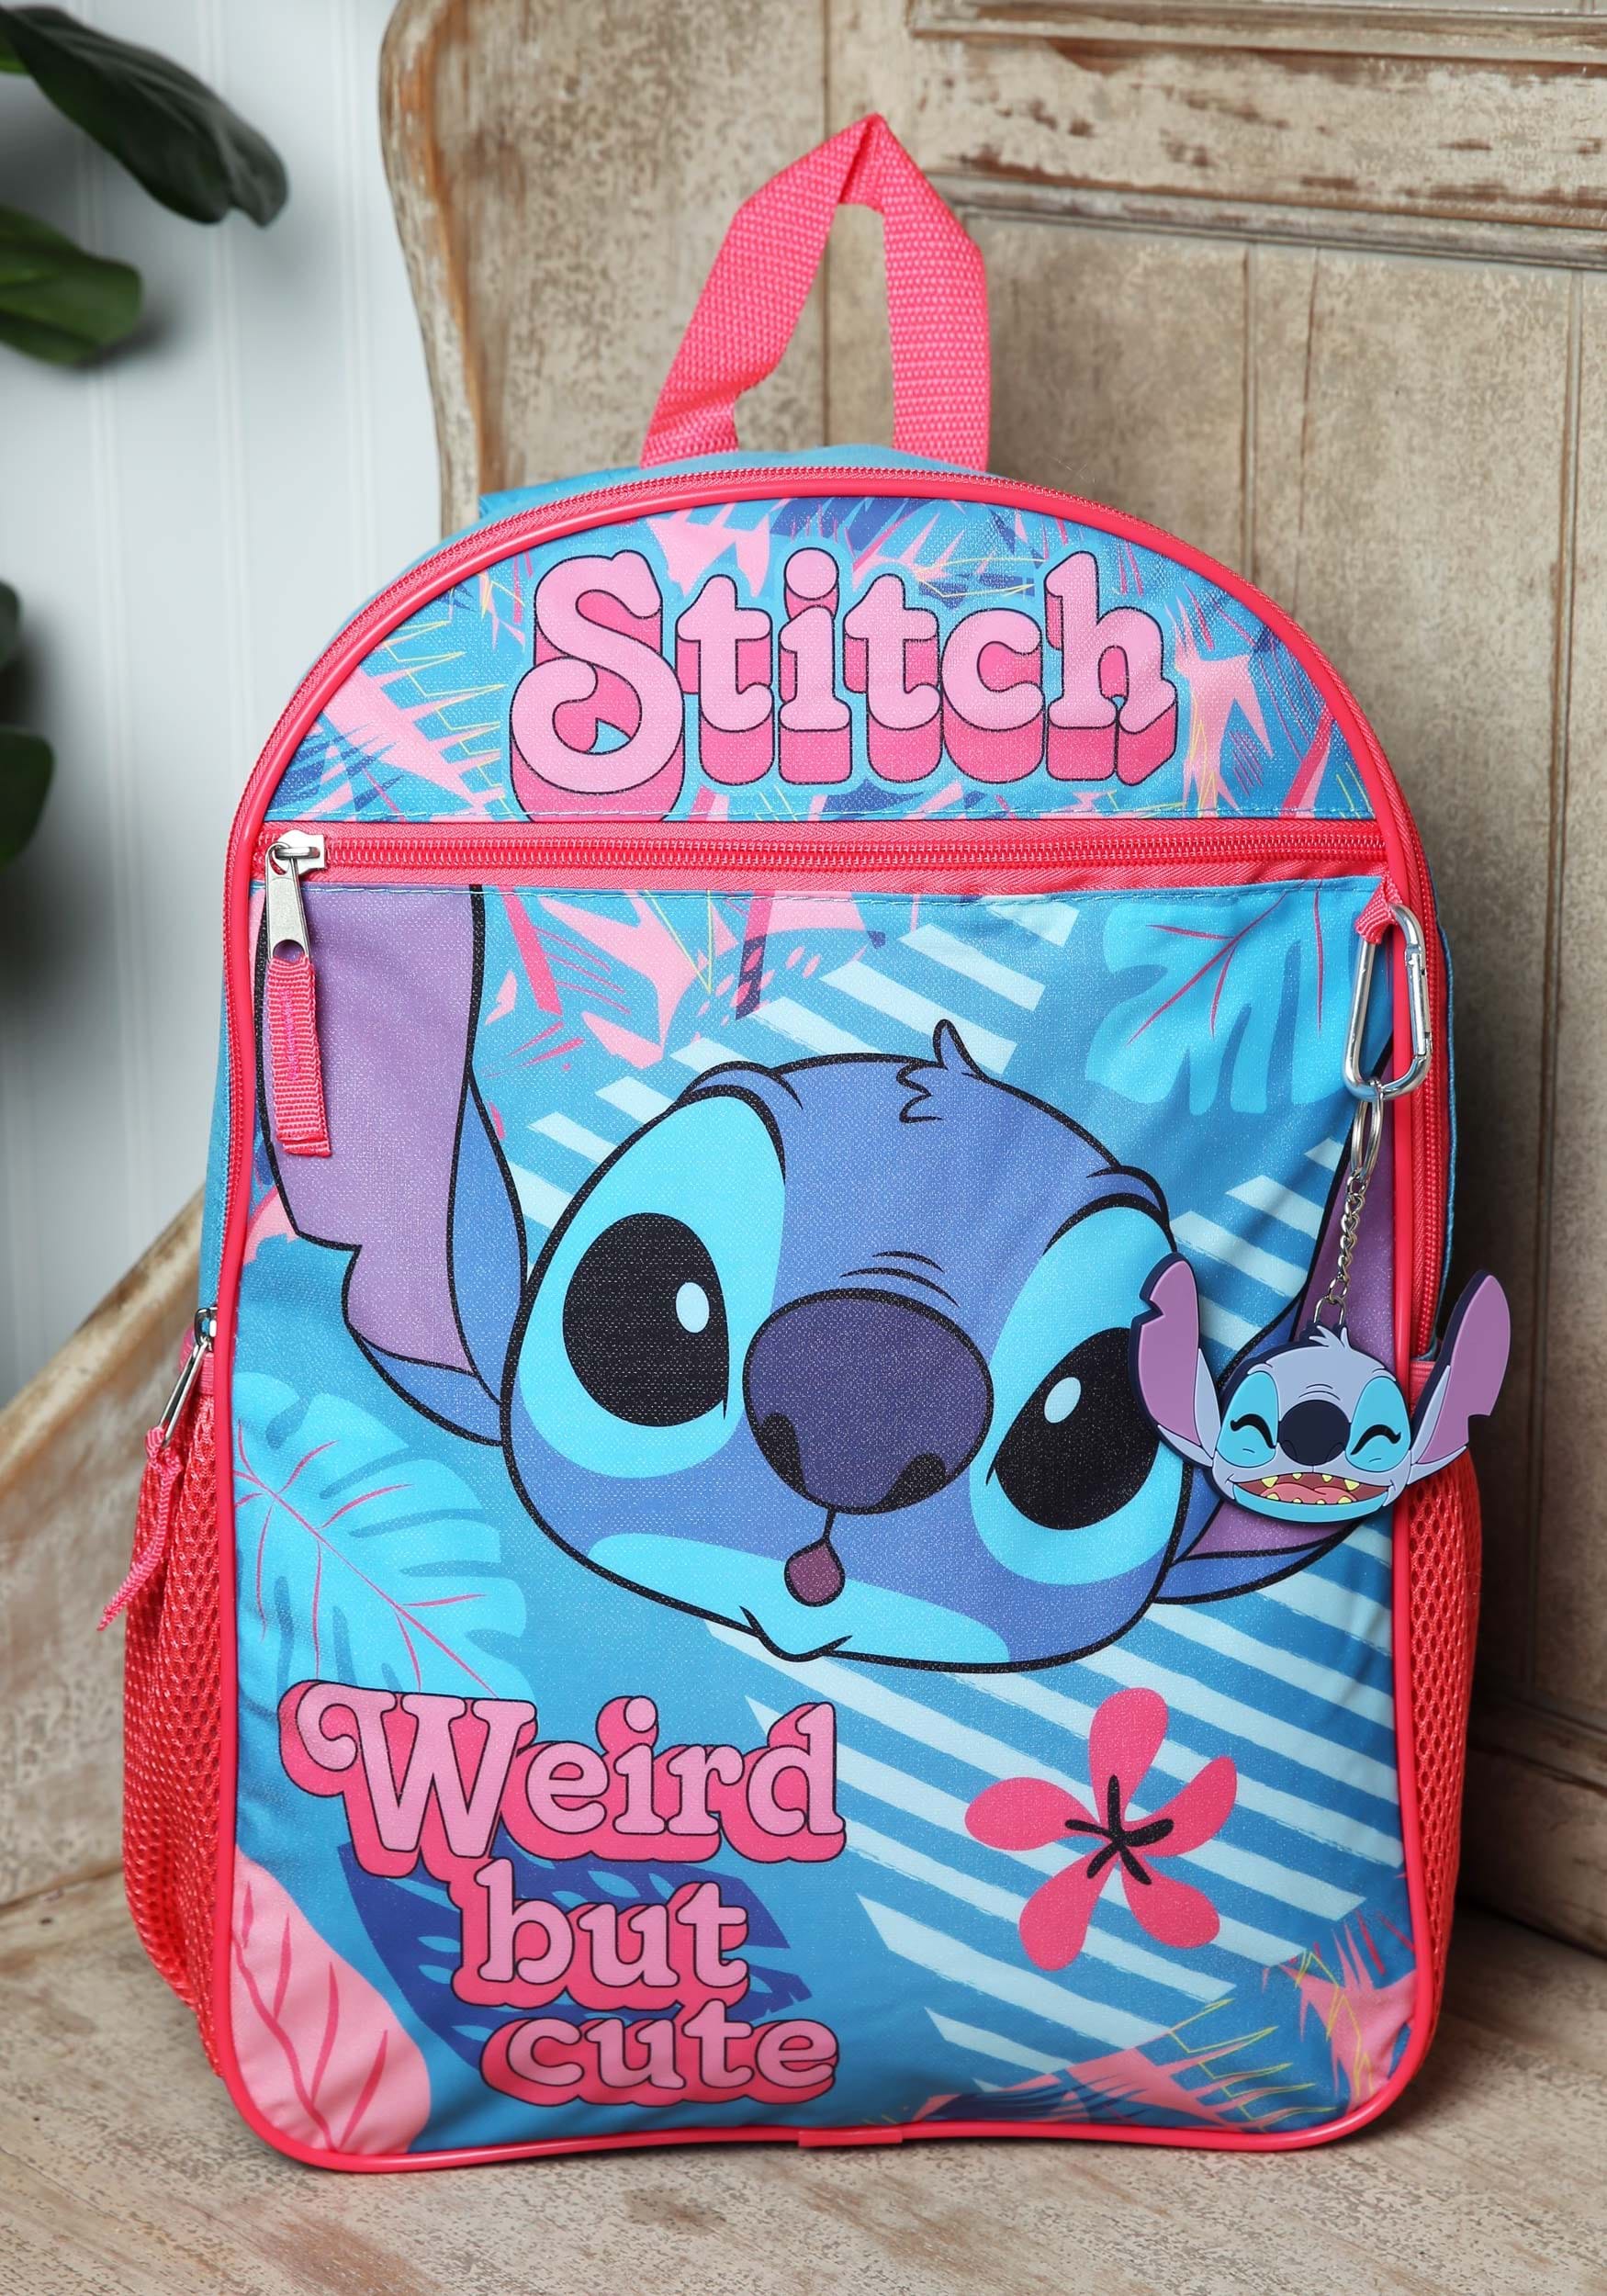 Lilo Stitch Stitch Backpack School Bag Three-piece Set